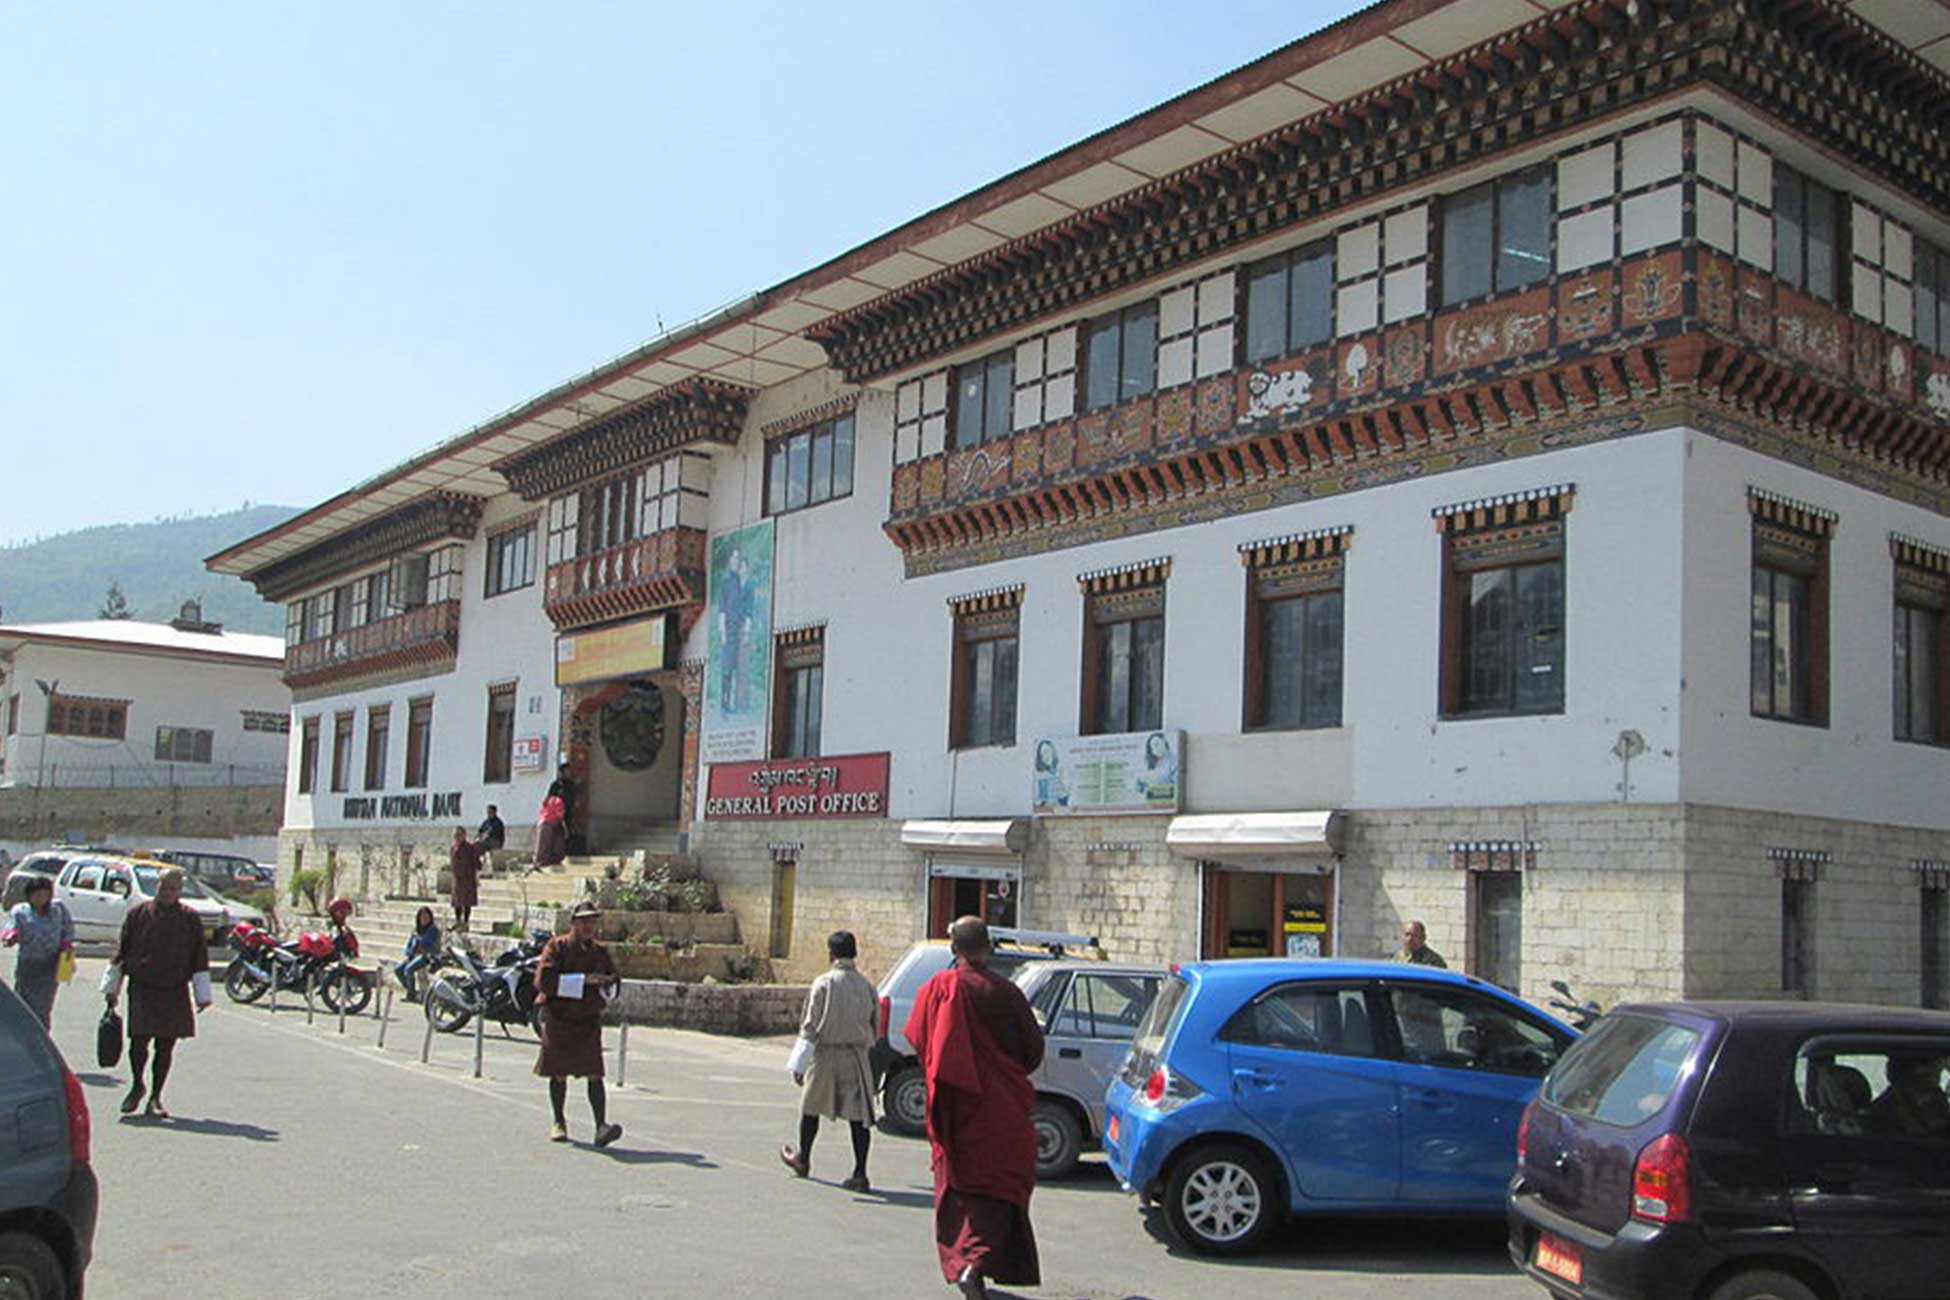 Open a bank account in Bhutan